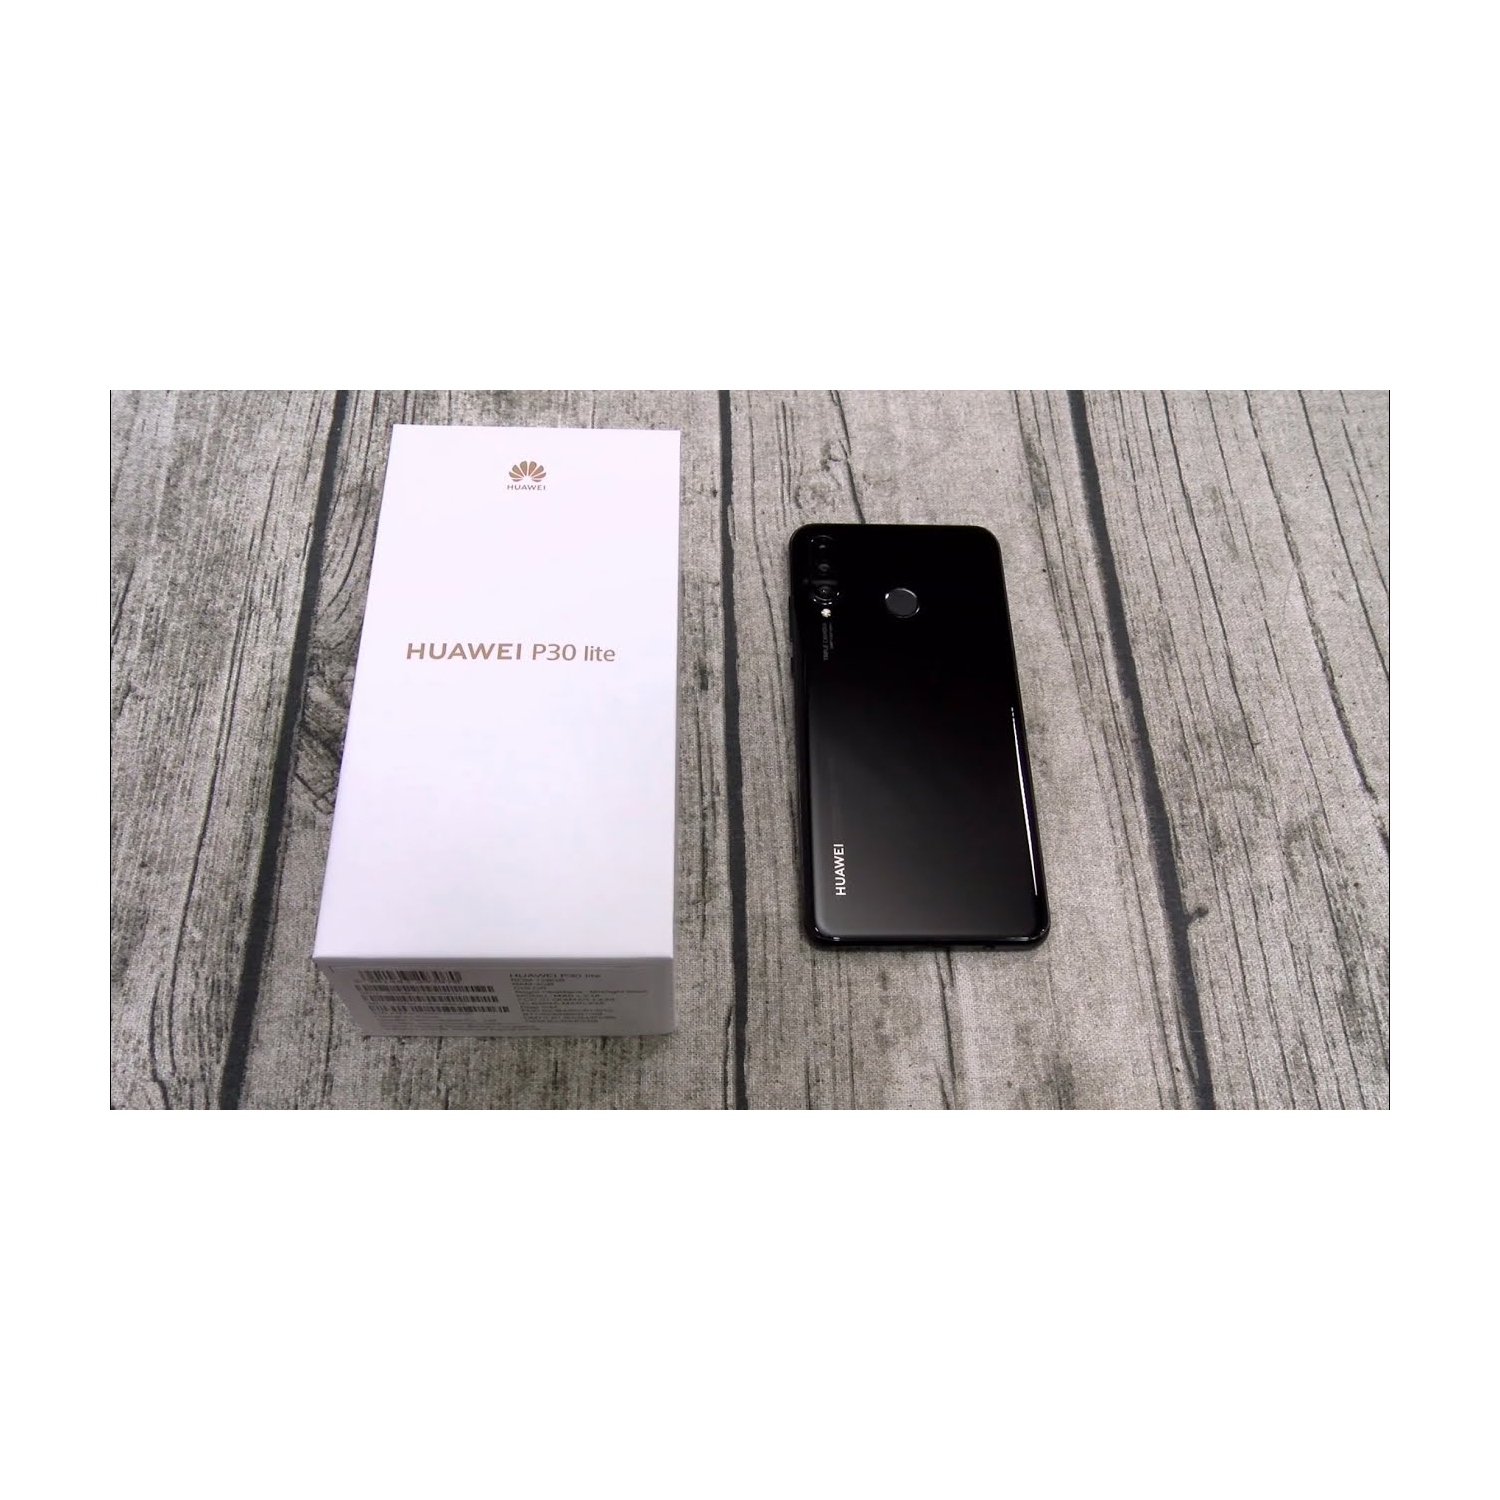 Refurbished (Excellent) - Huawei P30 Lite 128GB Smartphone - Midnight Black - Unlocked - Certified Refurbished